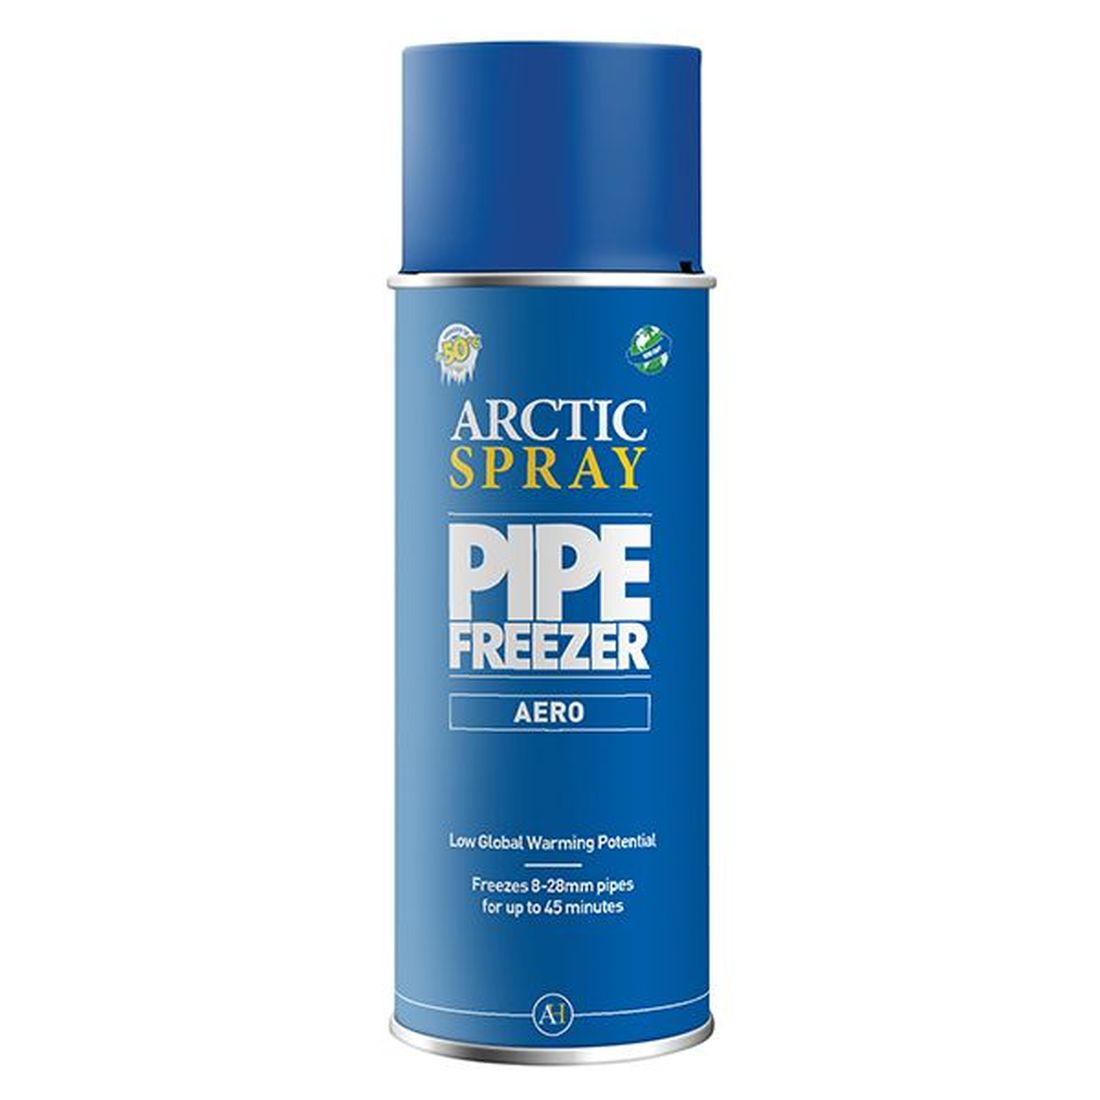 Arctic Hayes ZE Spray Pipe Freezer Aero Large 300ml                                          